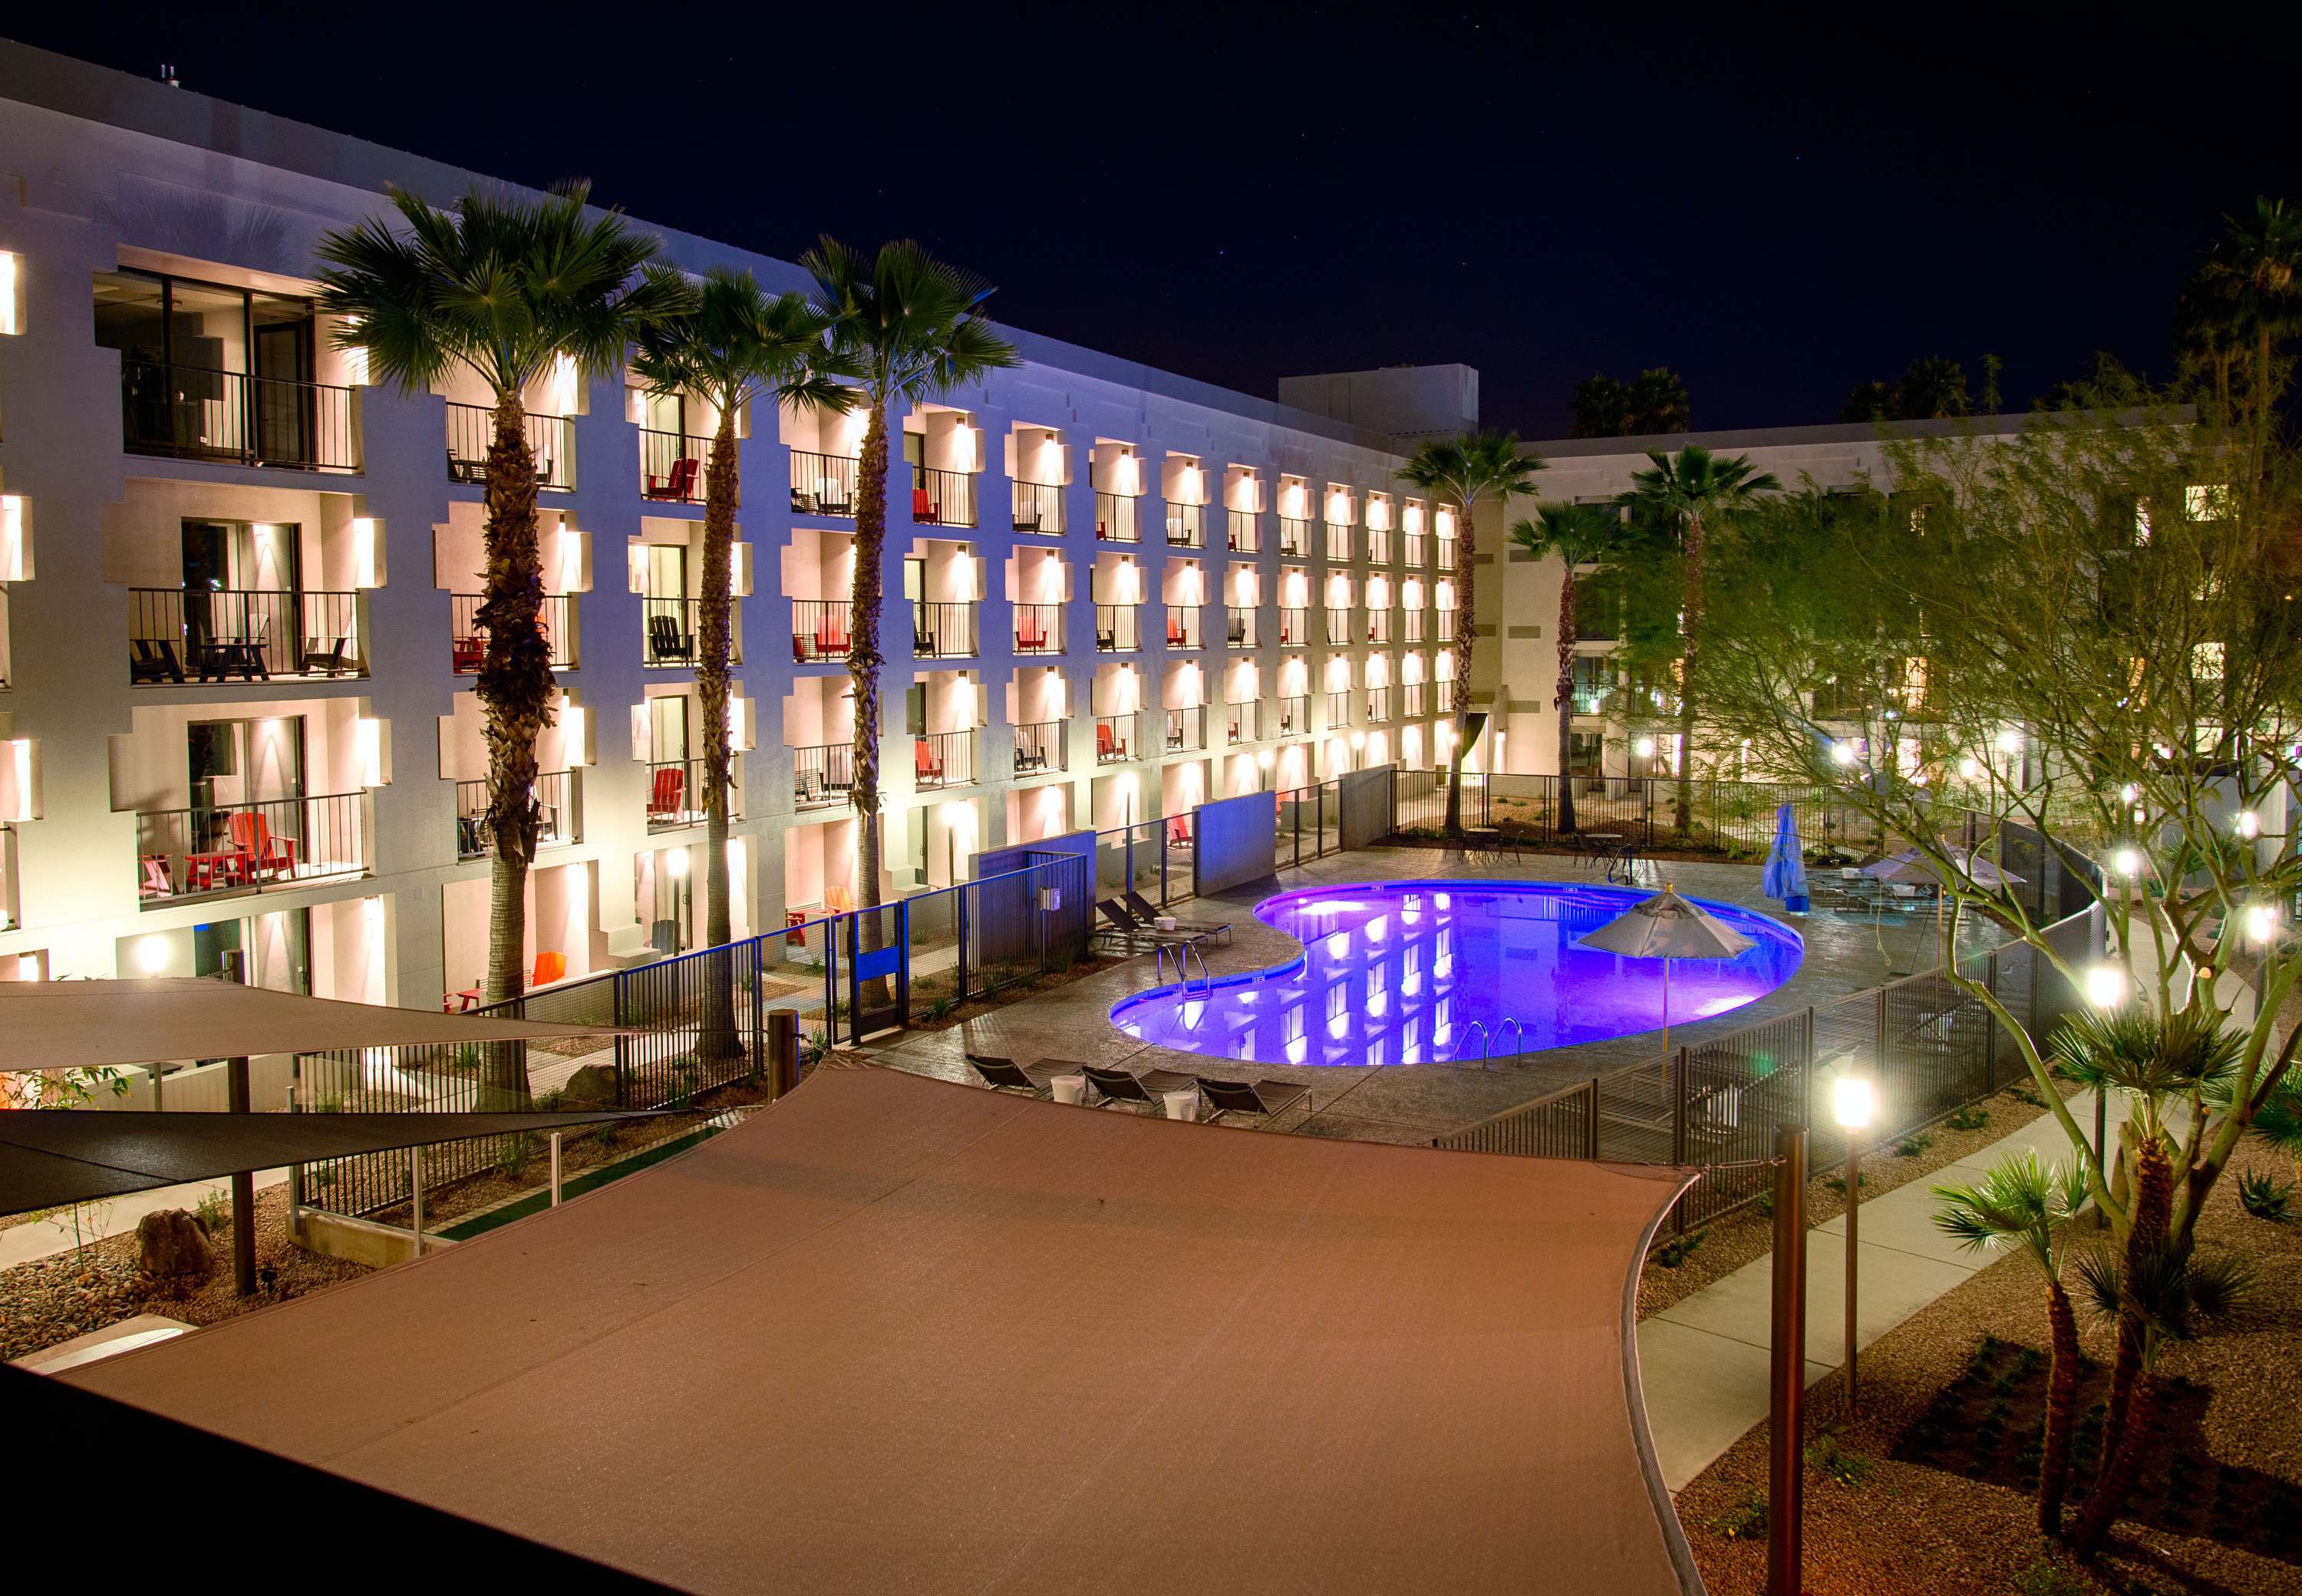 Photo of Twenty Four Seven Hotels, Newport Beach, CA